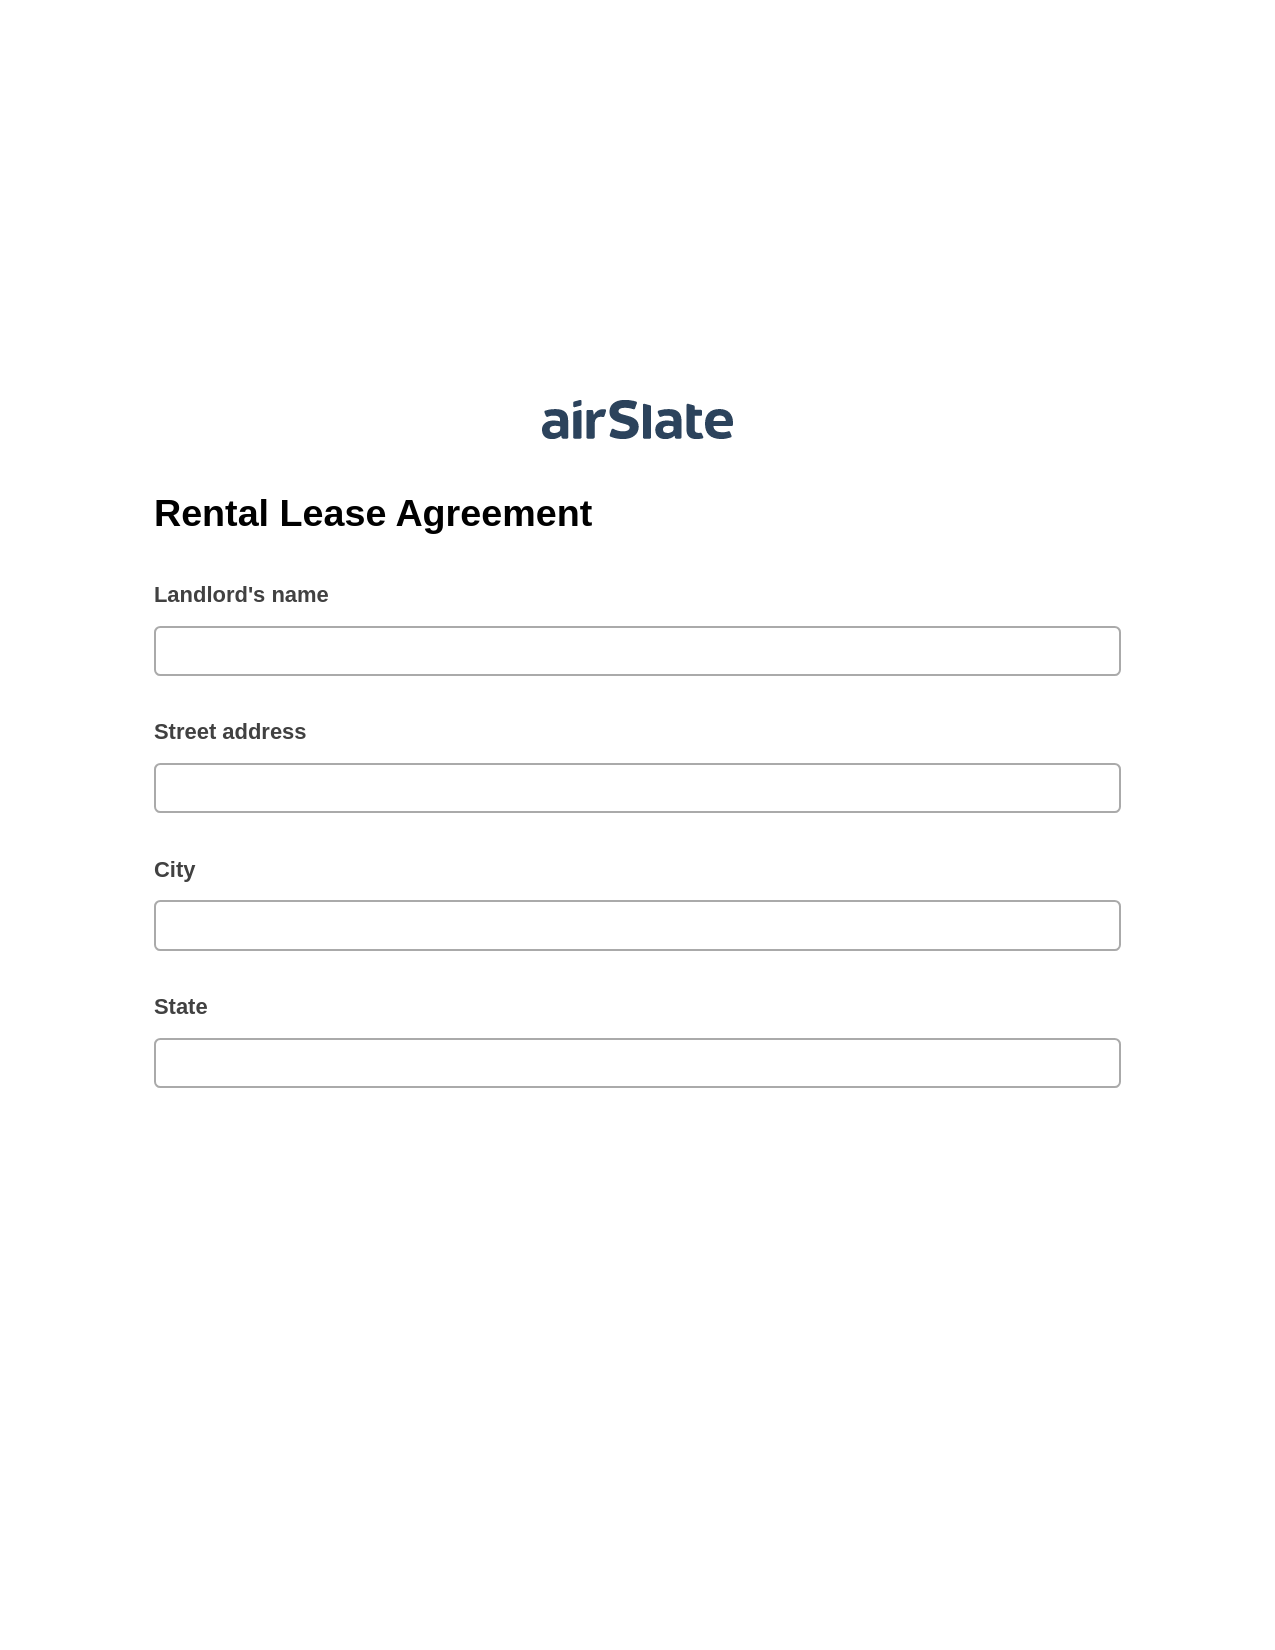 Rental Lease Agreement Pre-fill from Google Sheet Dropdown Options Bot, Set signature type addon, Dropbox Bot